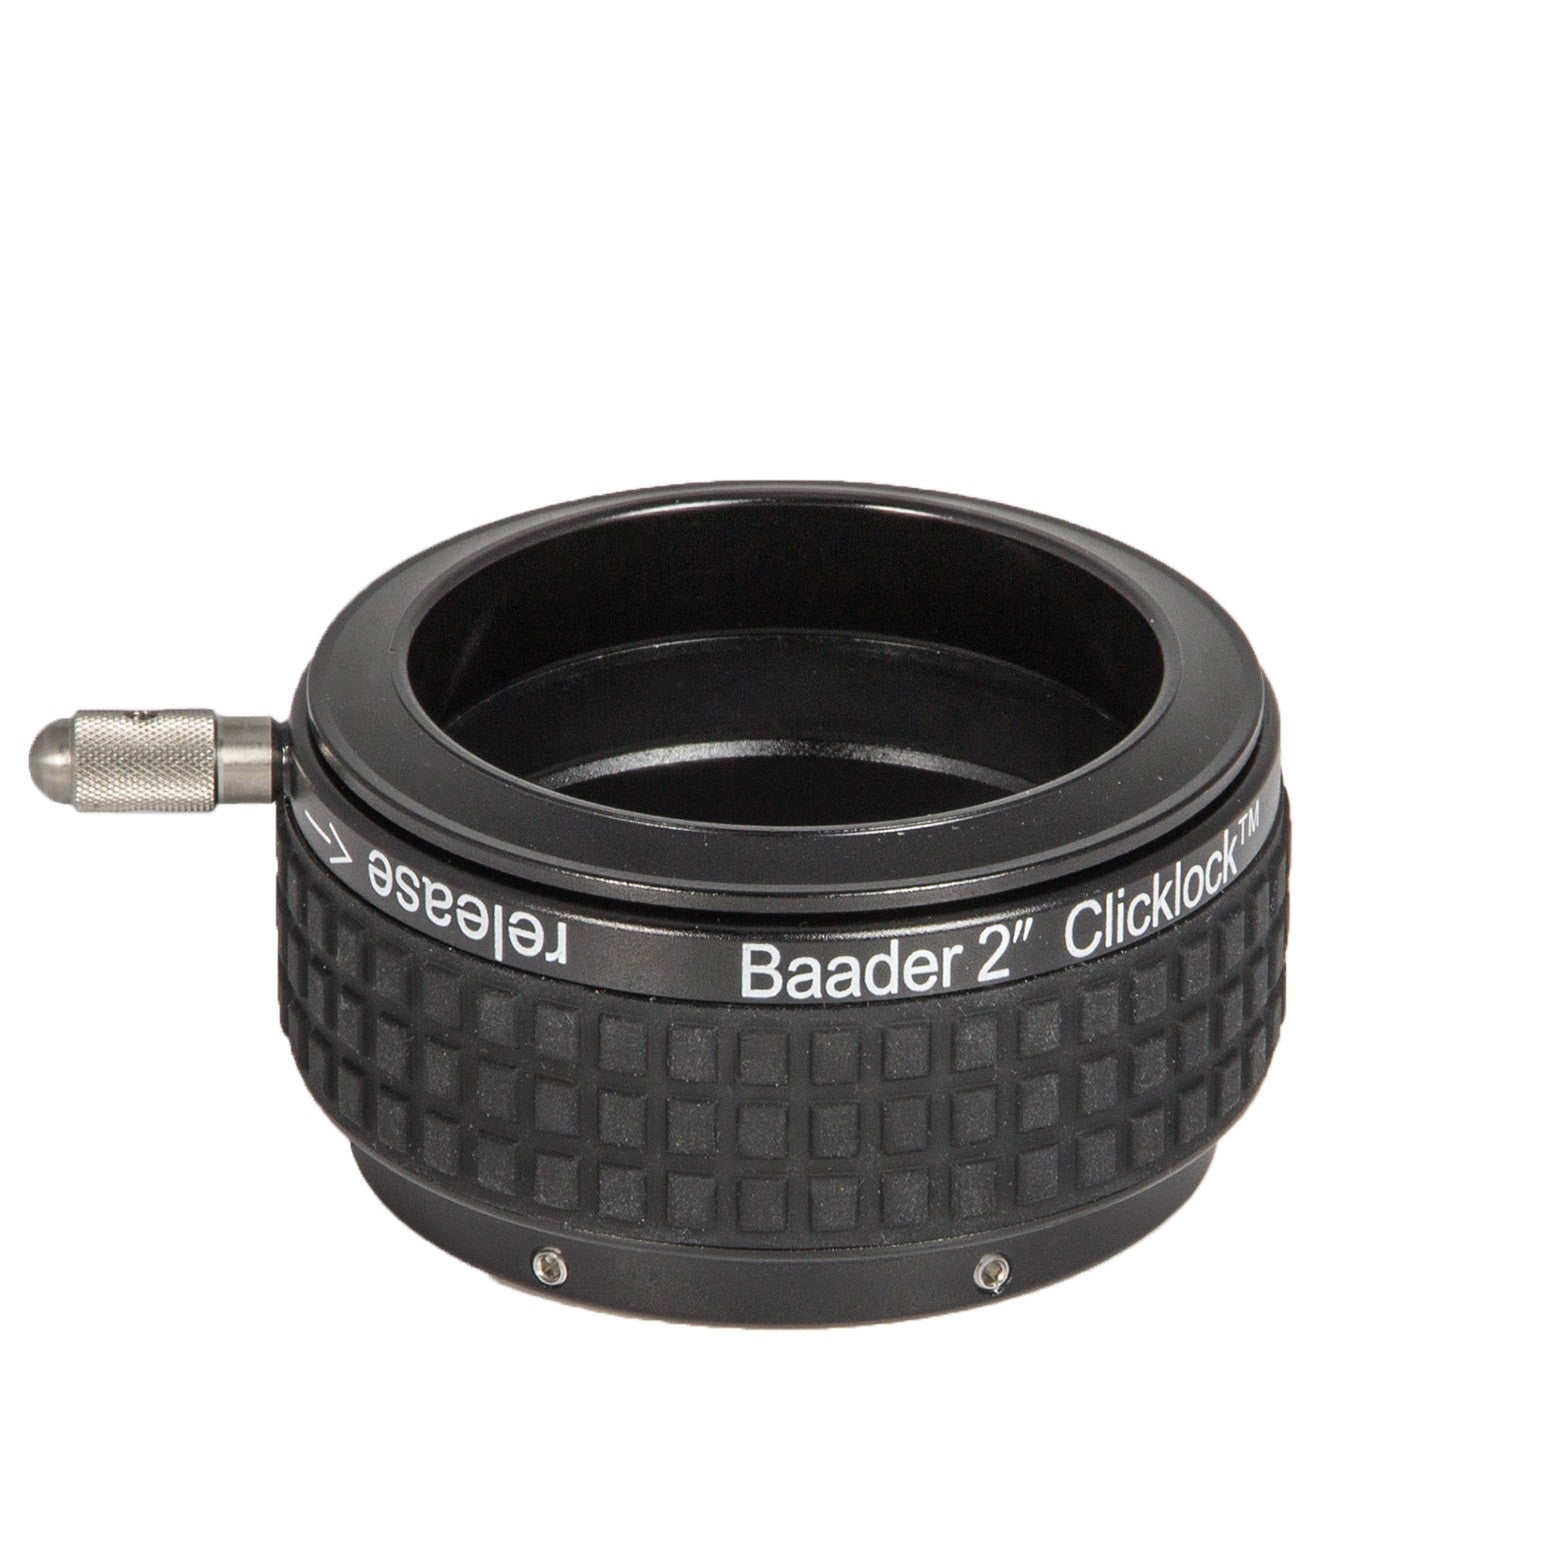 Baader Planetarium Accessory Baader 2" Clicklock Clamp for T-Thread (Internal M42 Thread) - 2956242